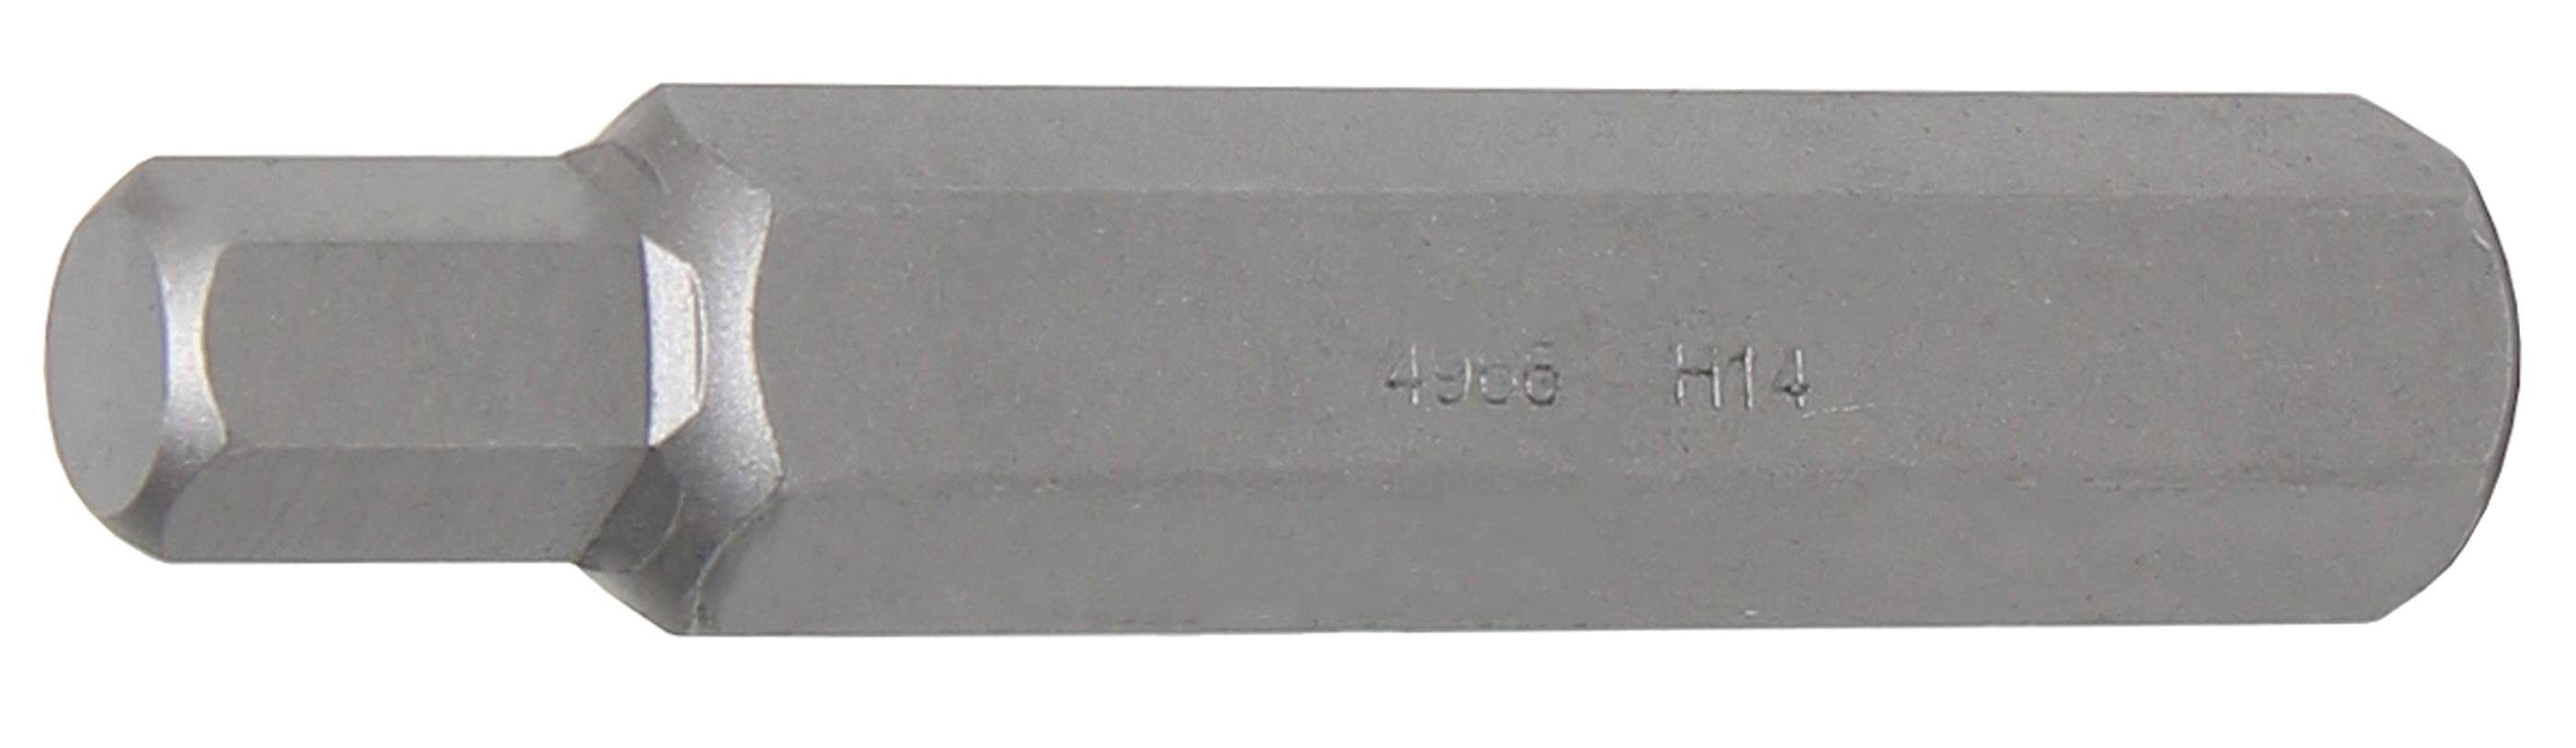 BGS technic Sechskant-Bit Bit, Länge 75 mm, Antrieb Außensechskant 10 mm (3/8), Innensechskant 14 mm | Bits